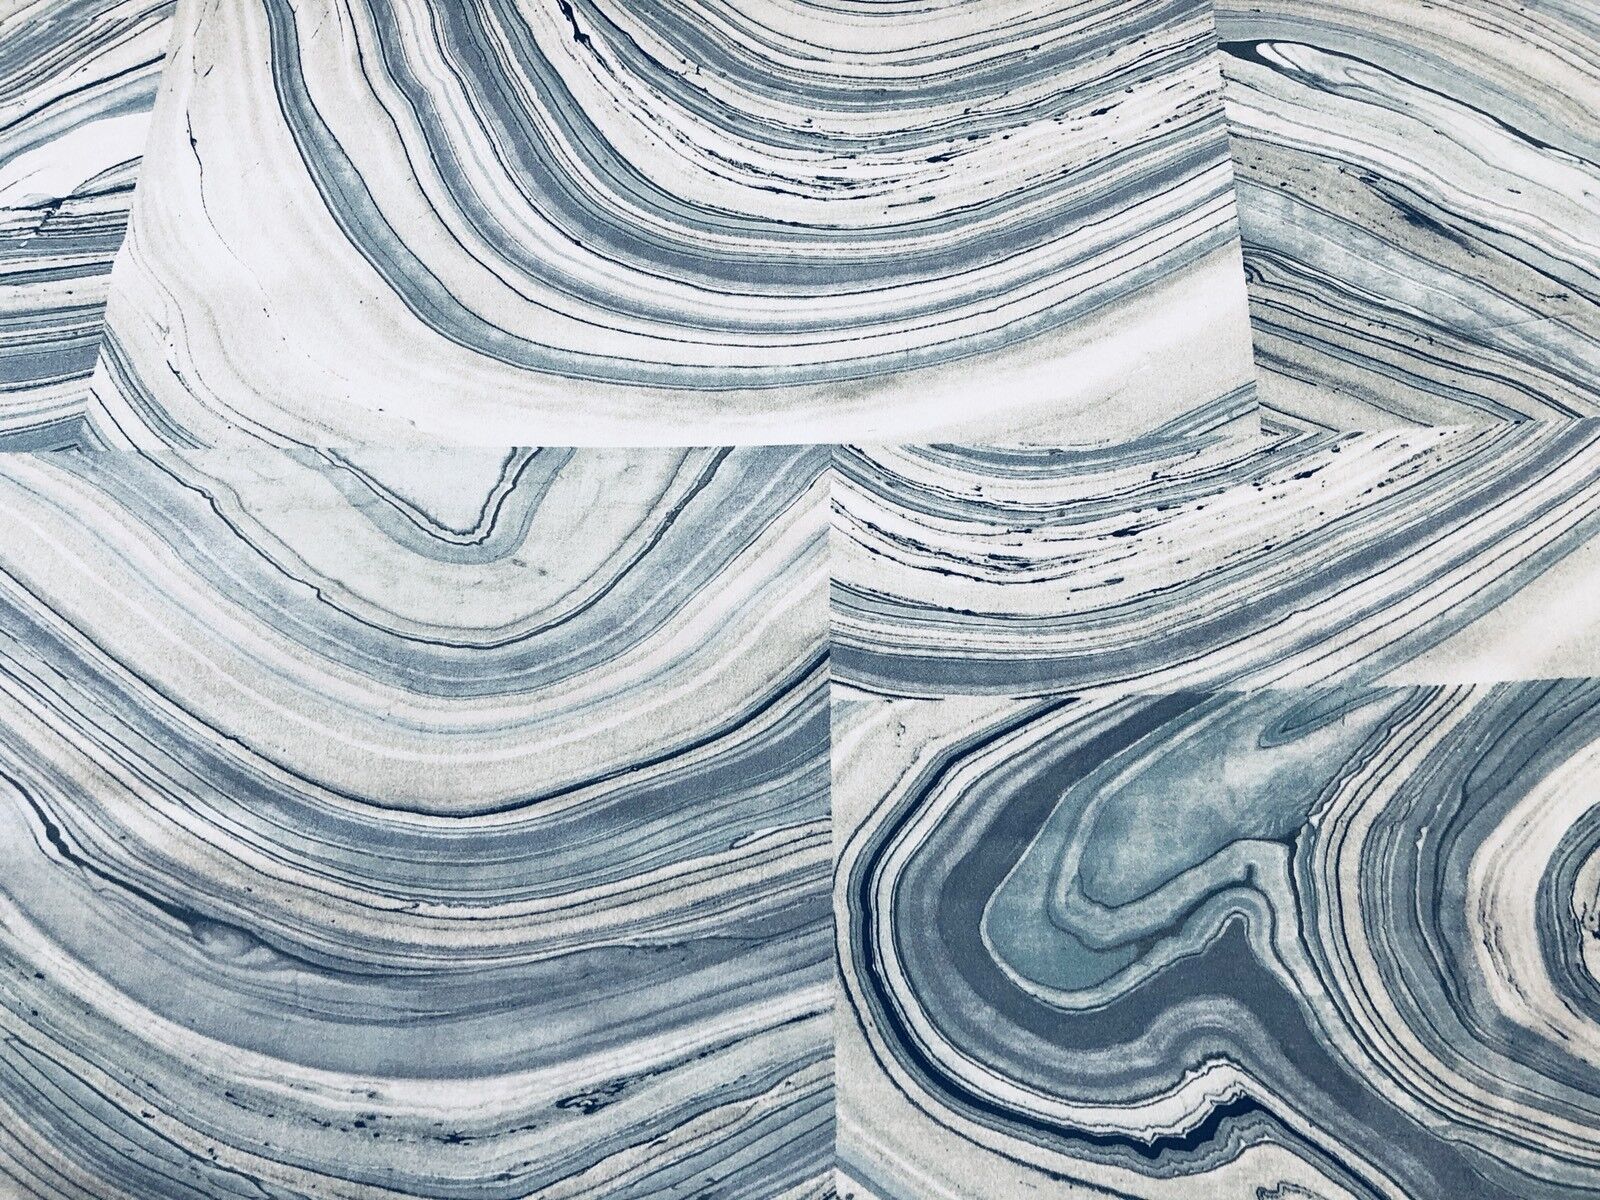 Kravet Blue Marbled Tile Cotton Print Upholstery Fabric- Marblework Lake 4.20 yd